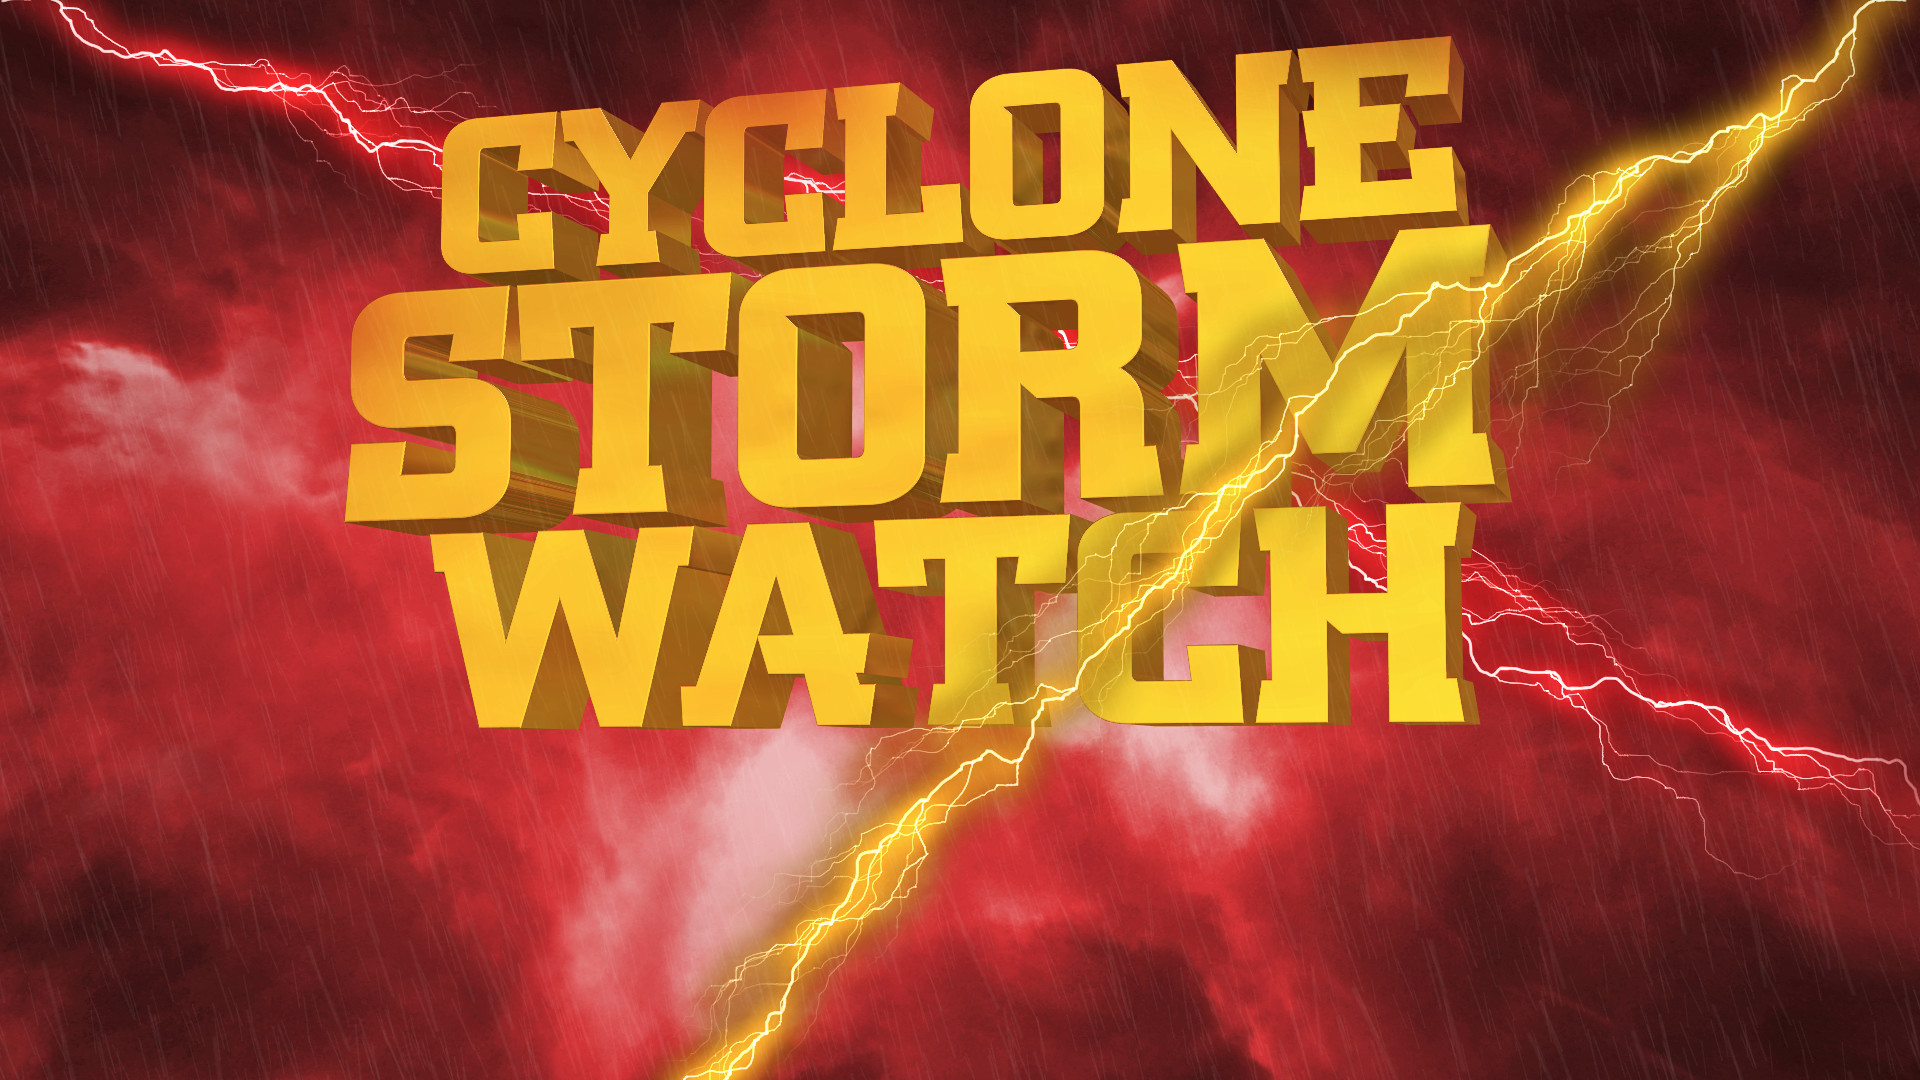 1920x1080 Cyclone Storm Watch Feb. 23rd